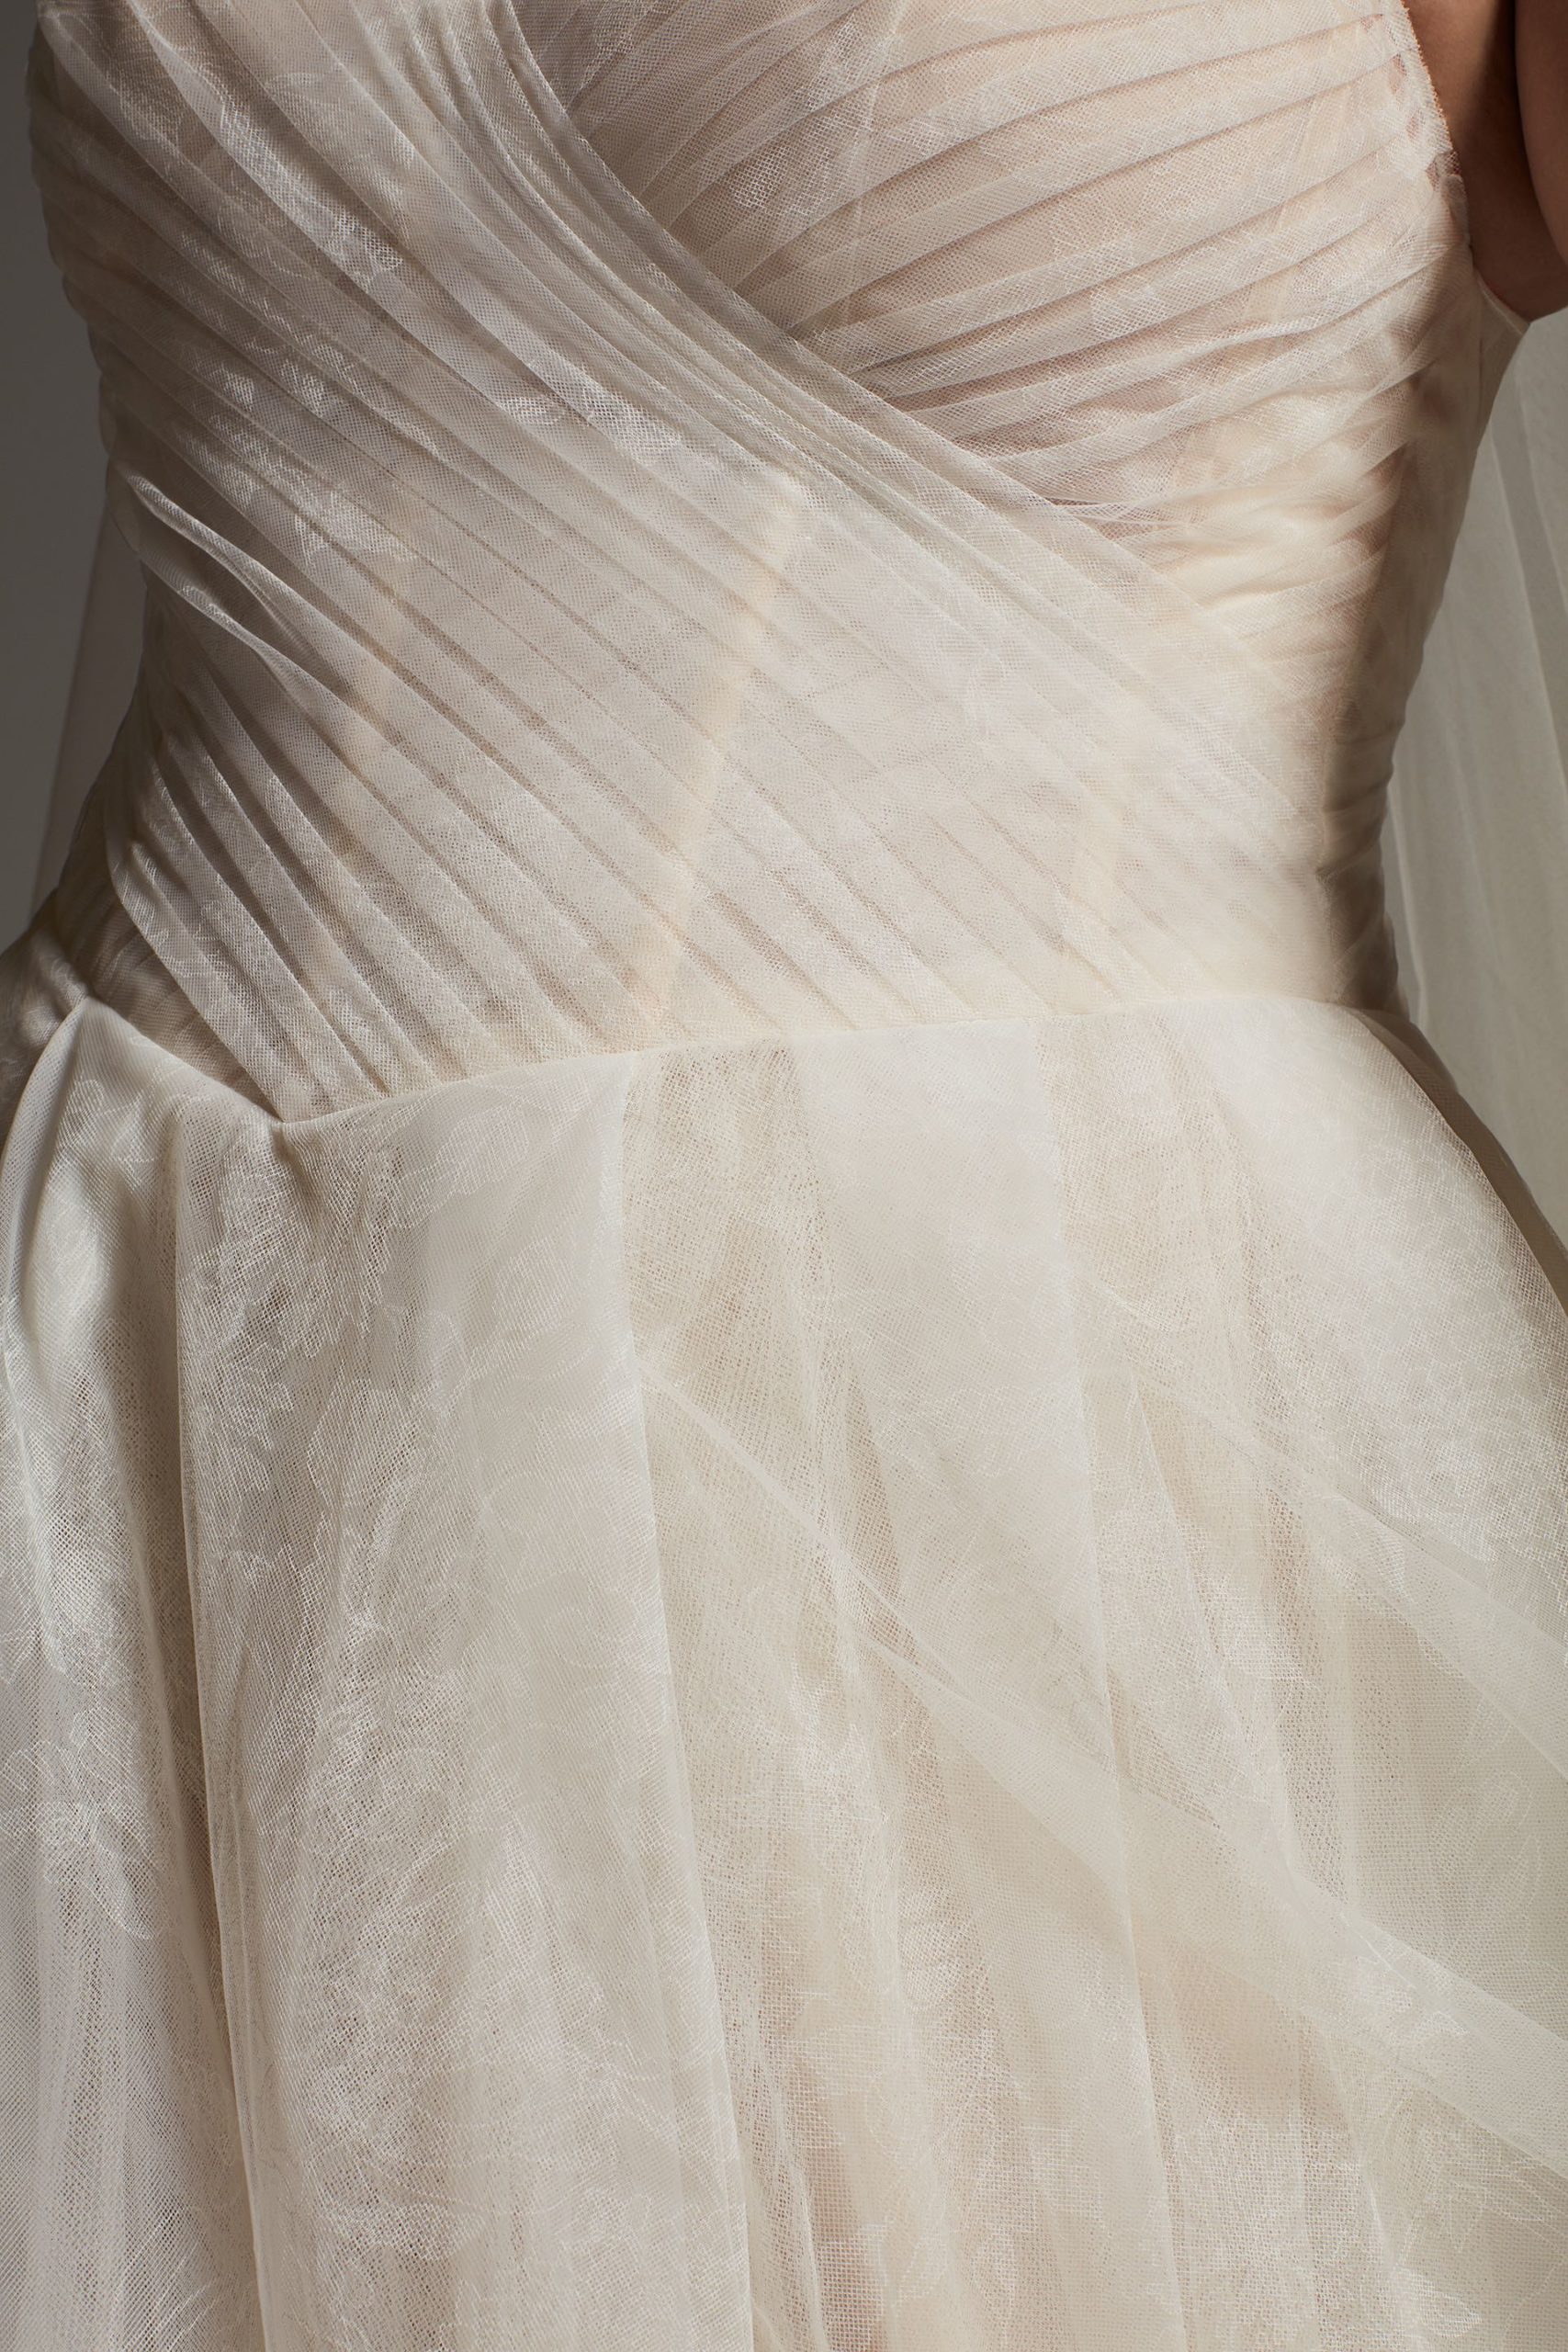 White by Vera Wang Rose Print Tulle Wedding Dress 